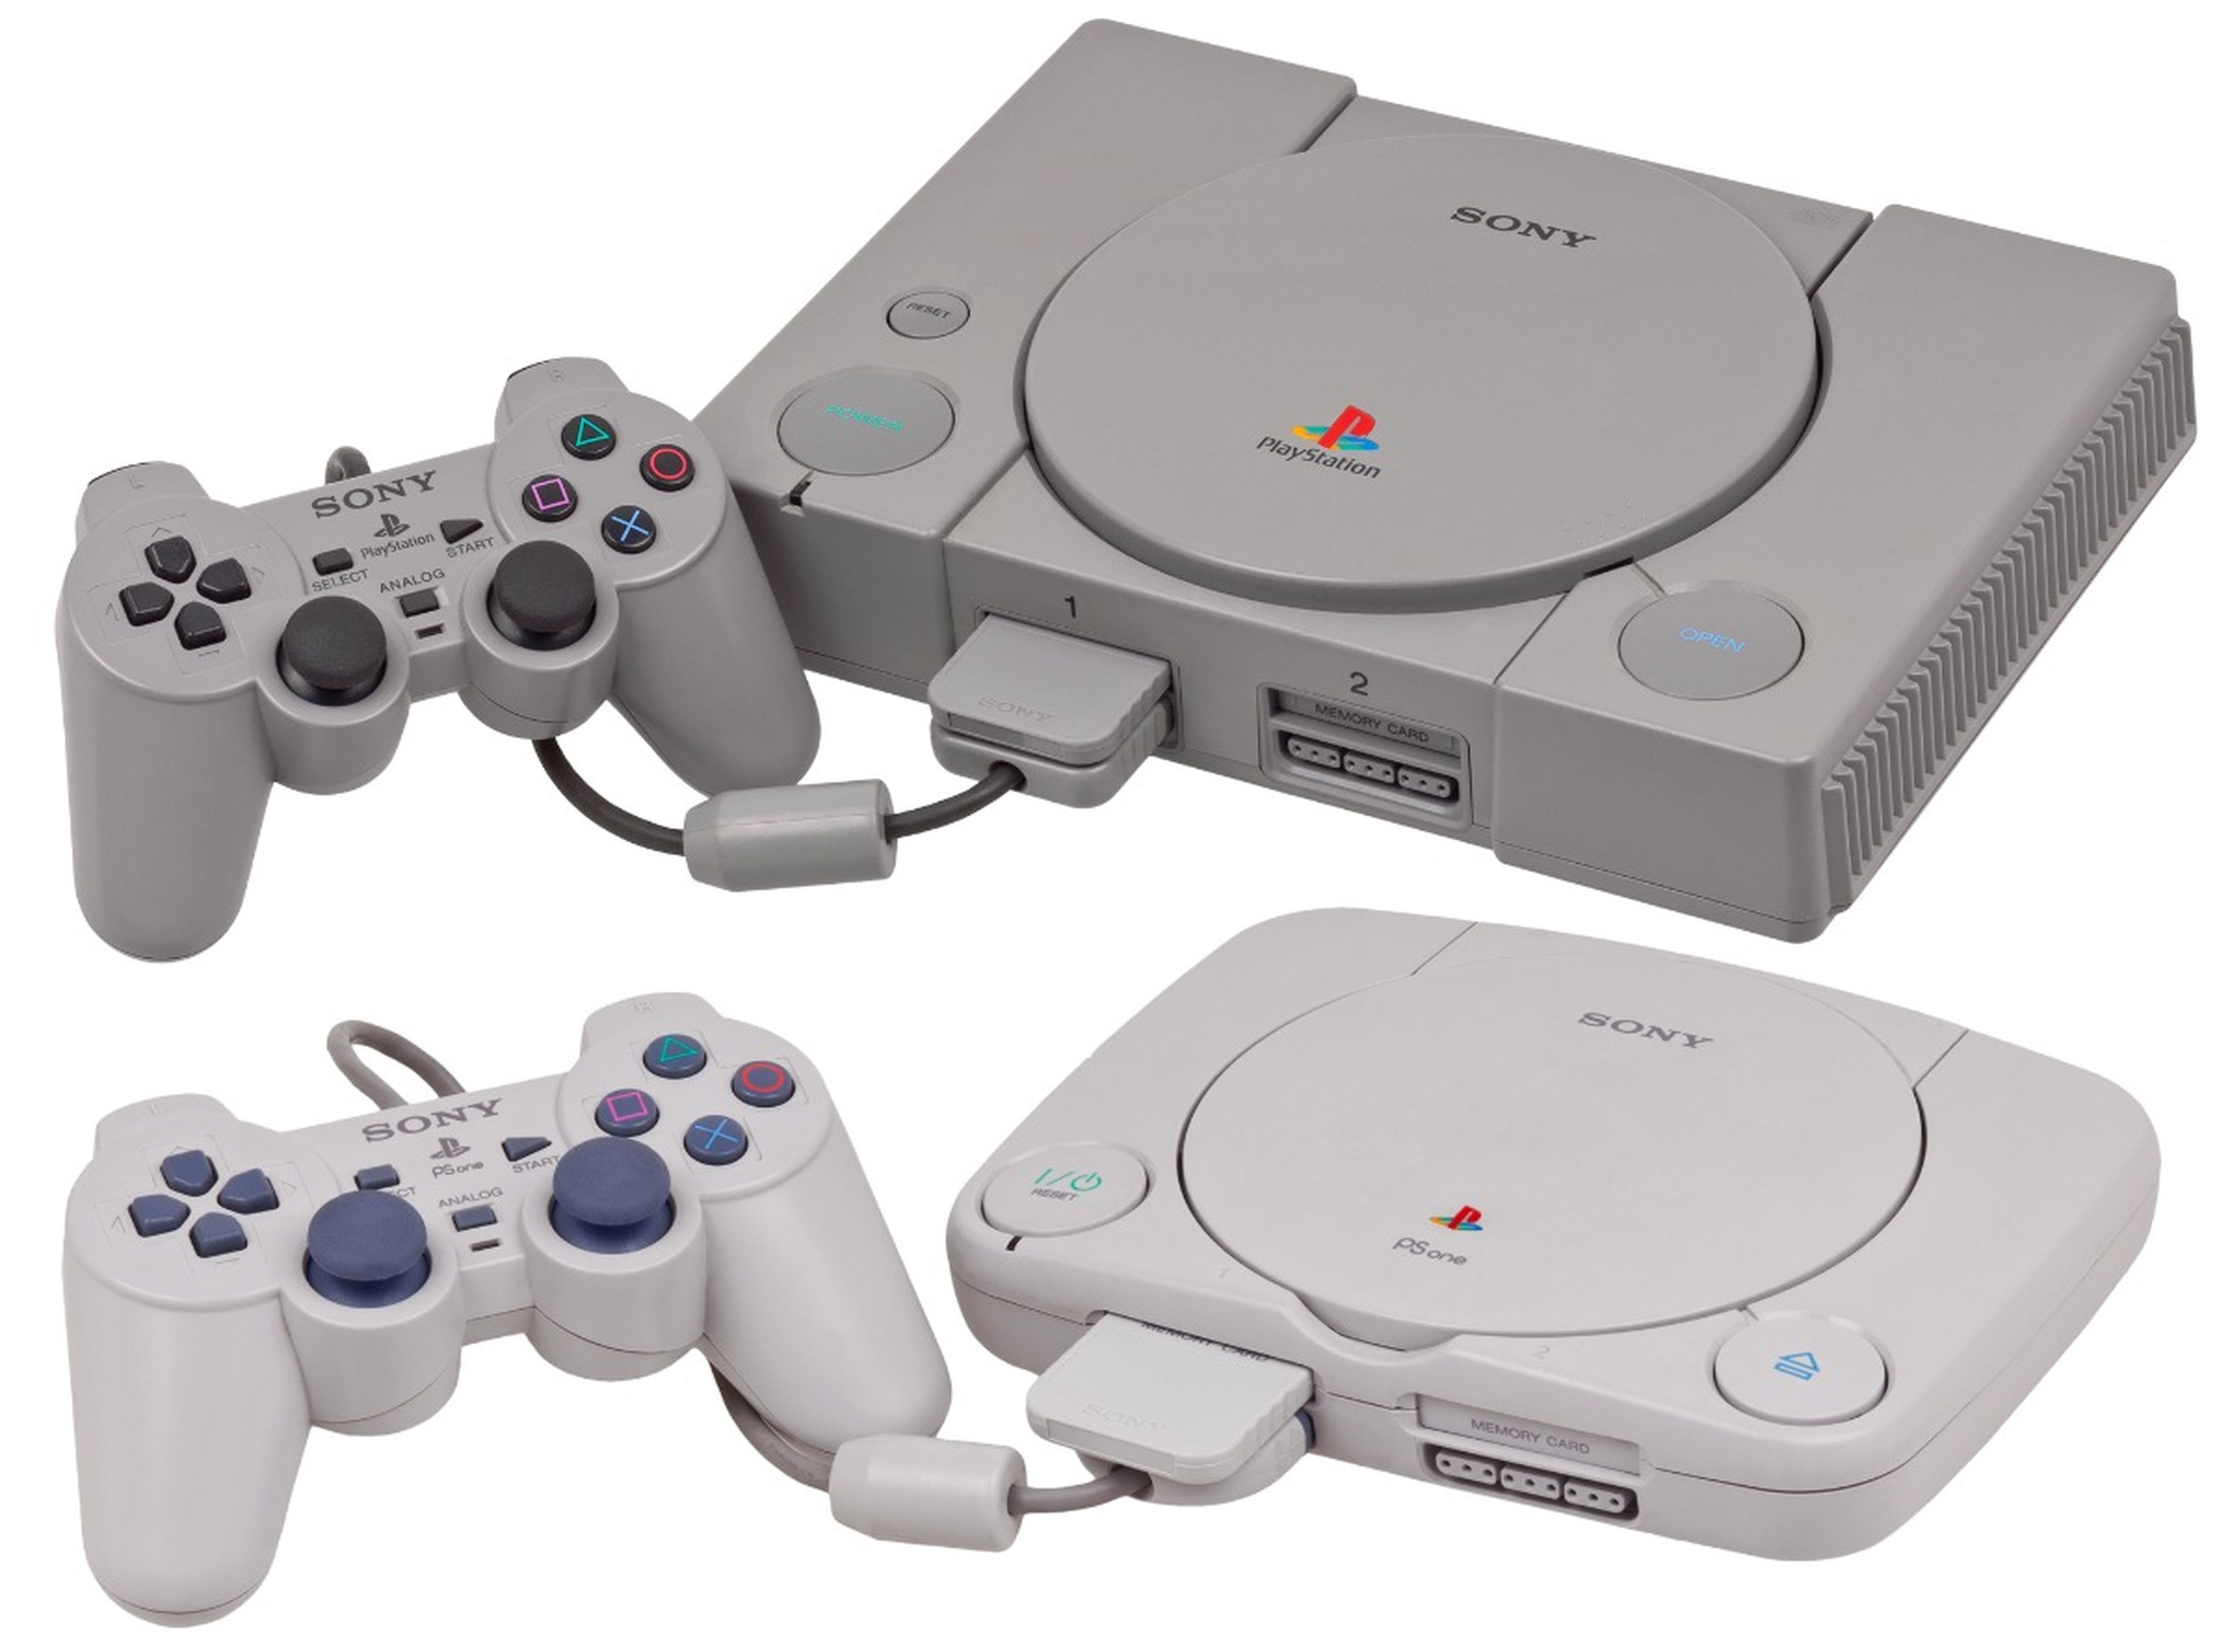 PlayStation: La historia 'secreta' del mando análogo de PS1